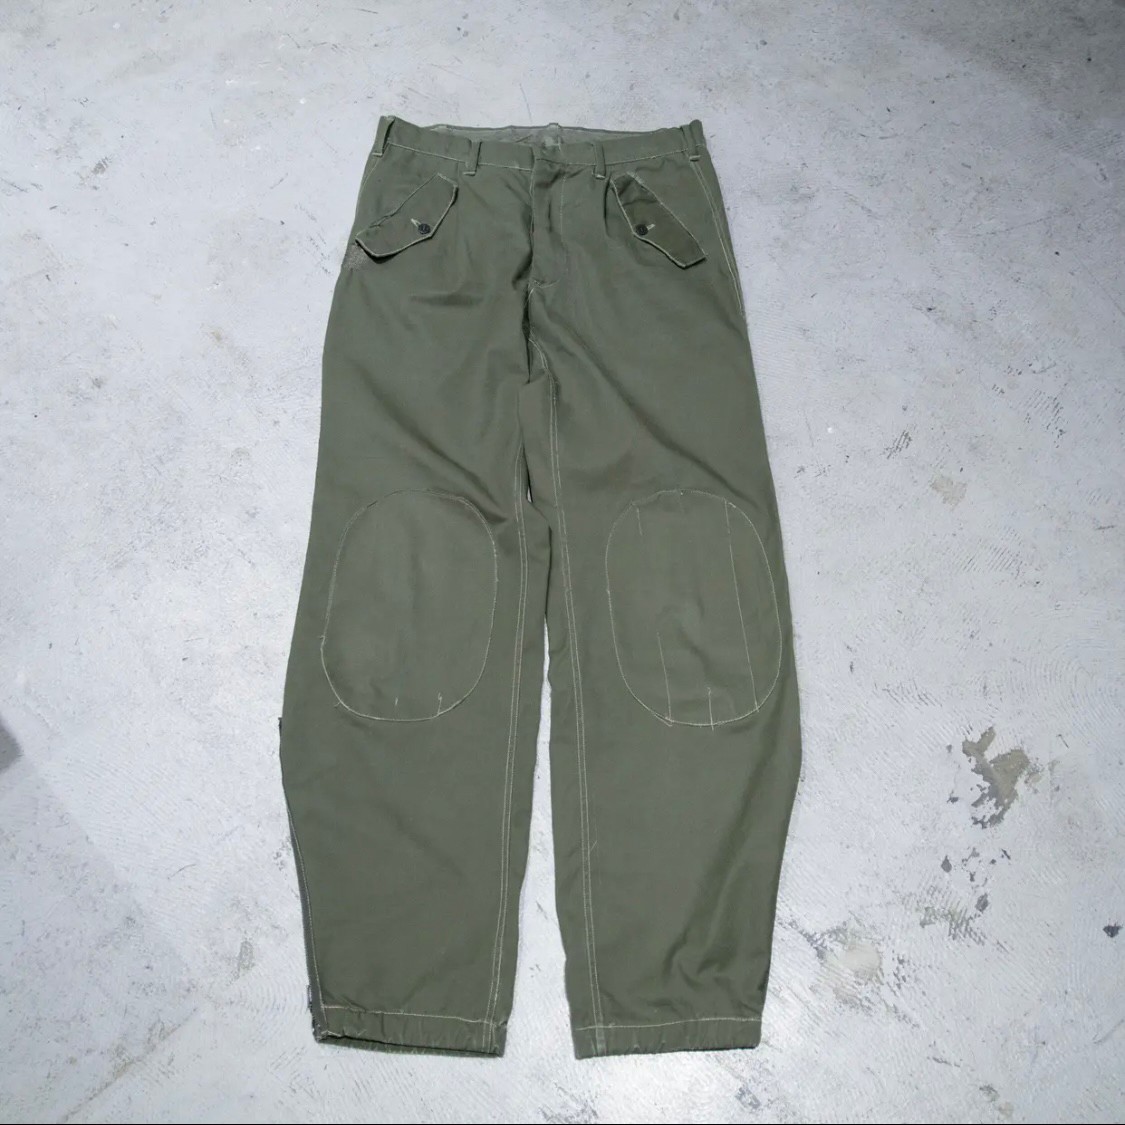 70s Italian army parachute pants